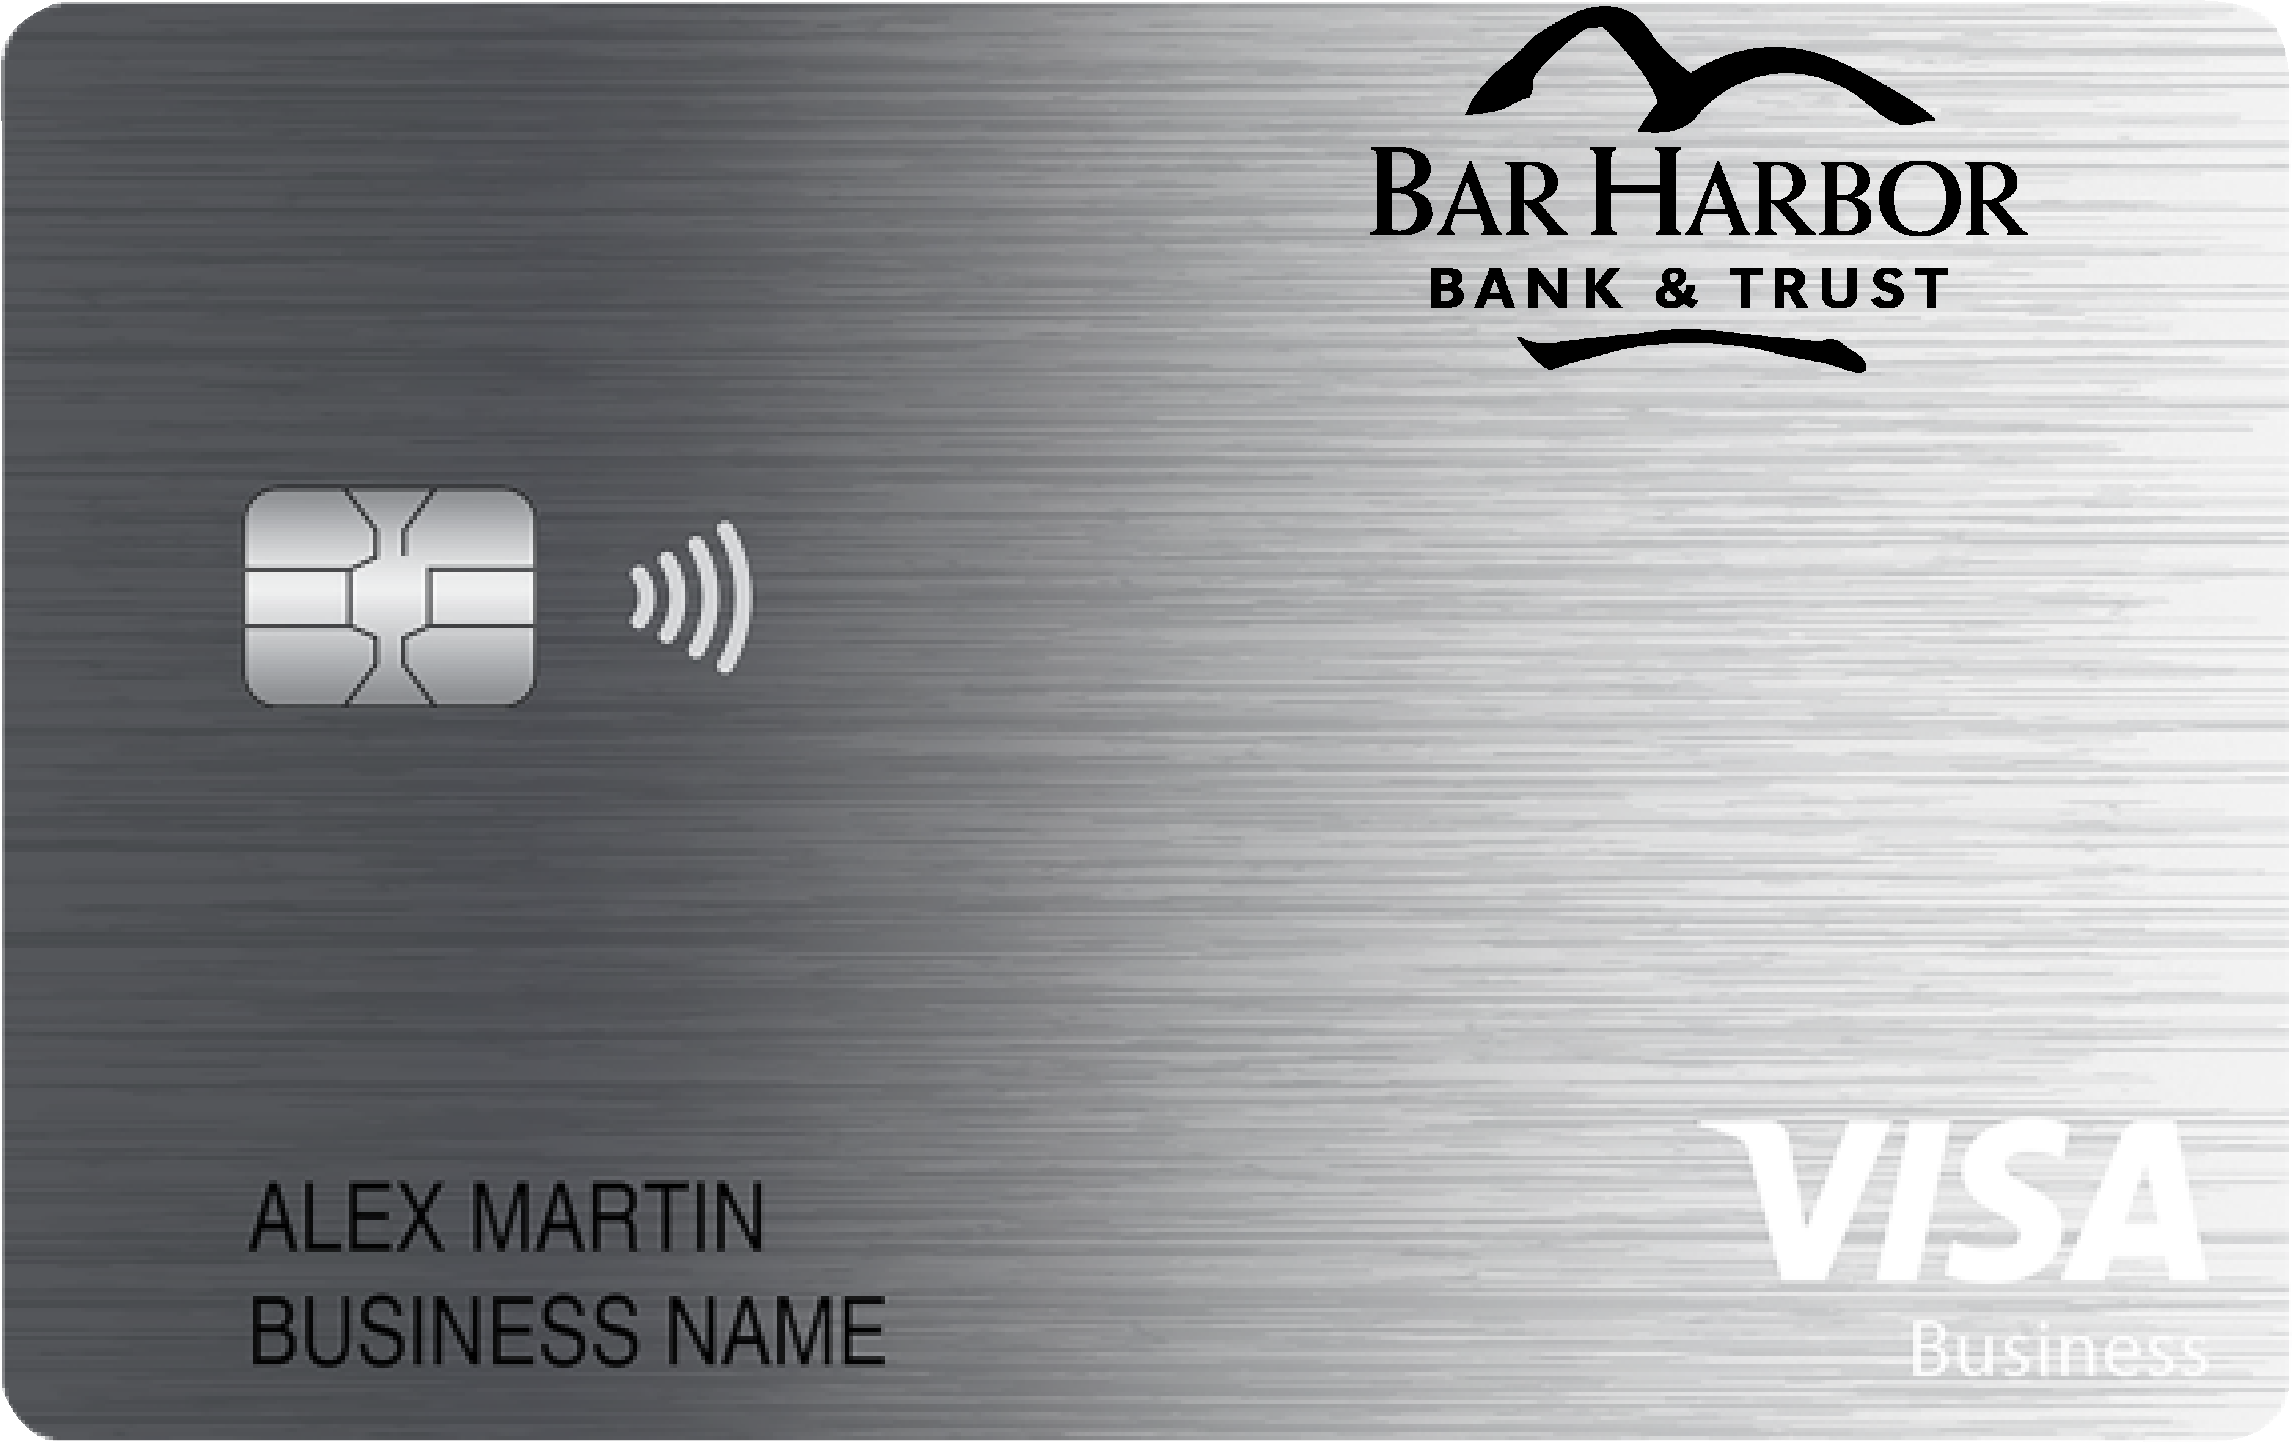 Bar Harbor Bank & Trust Business Real Rewards Card